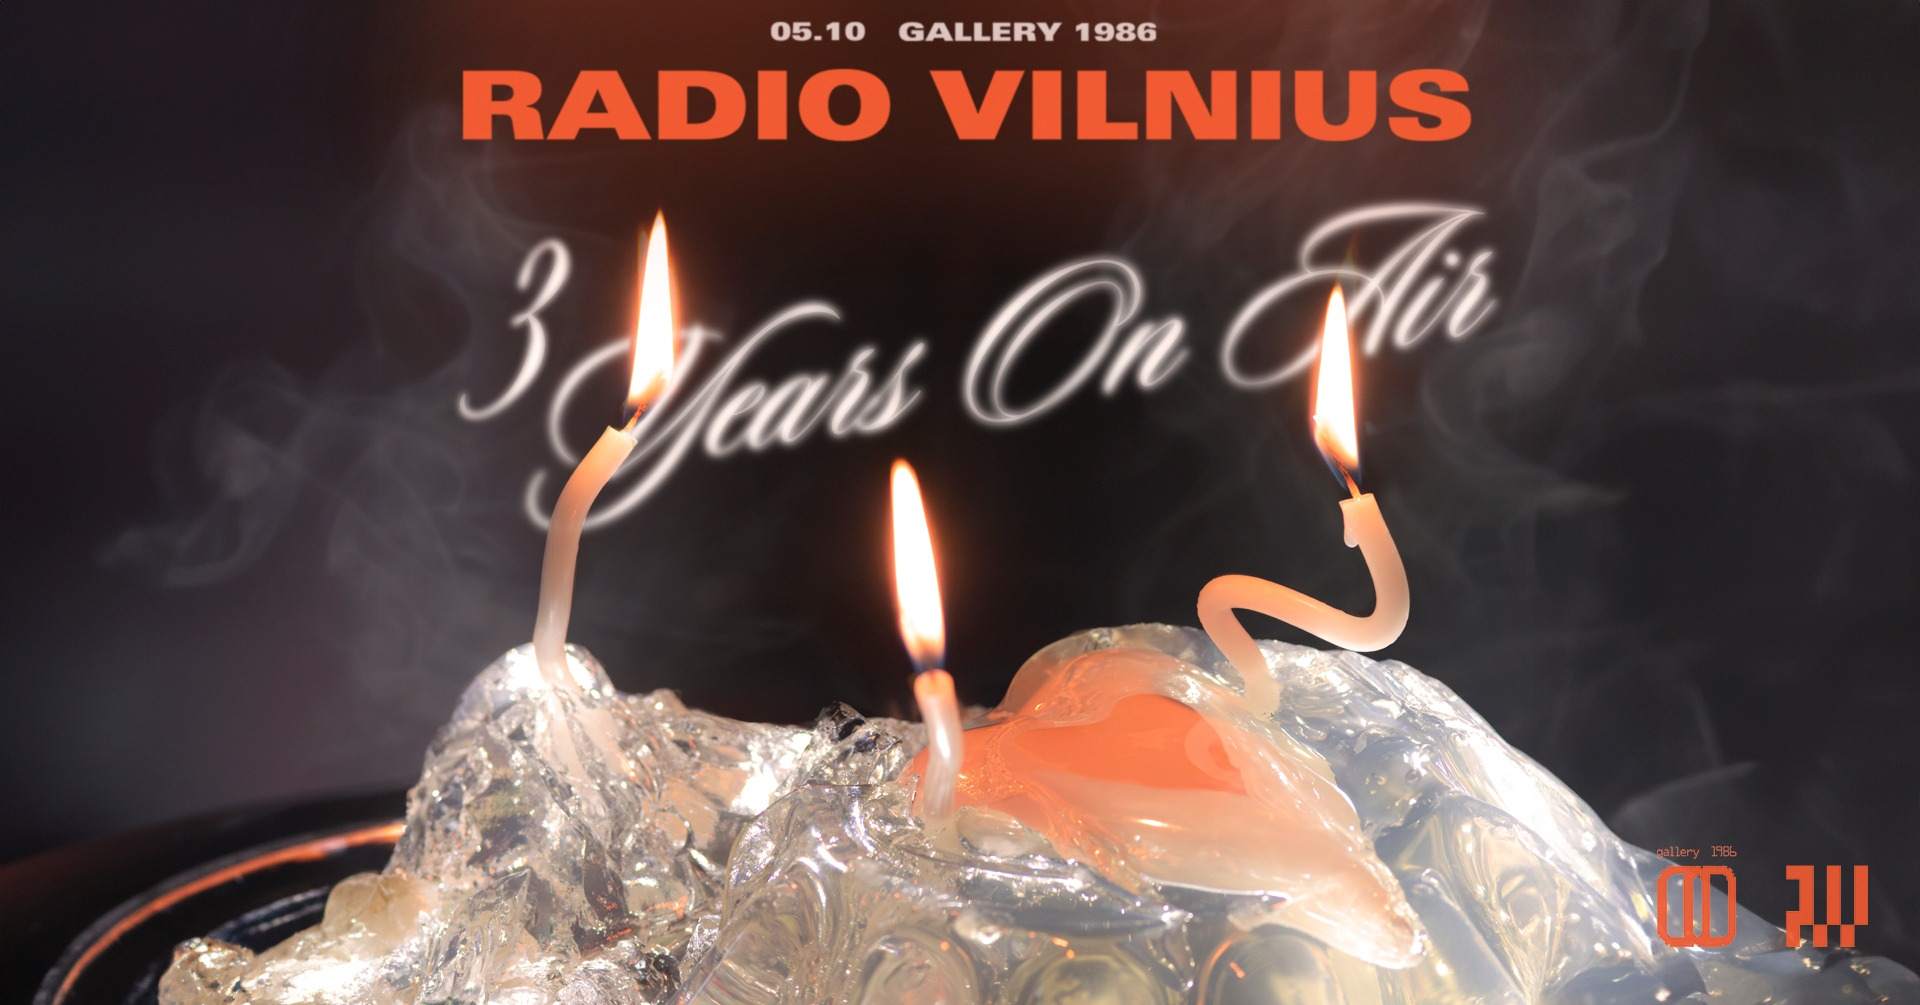 RADIO VILNIUS. 3 YEARS ON AIR - フライヤー表